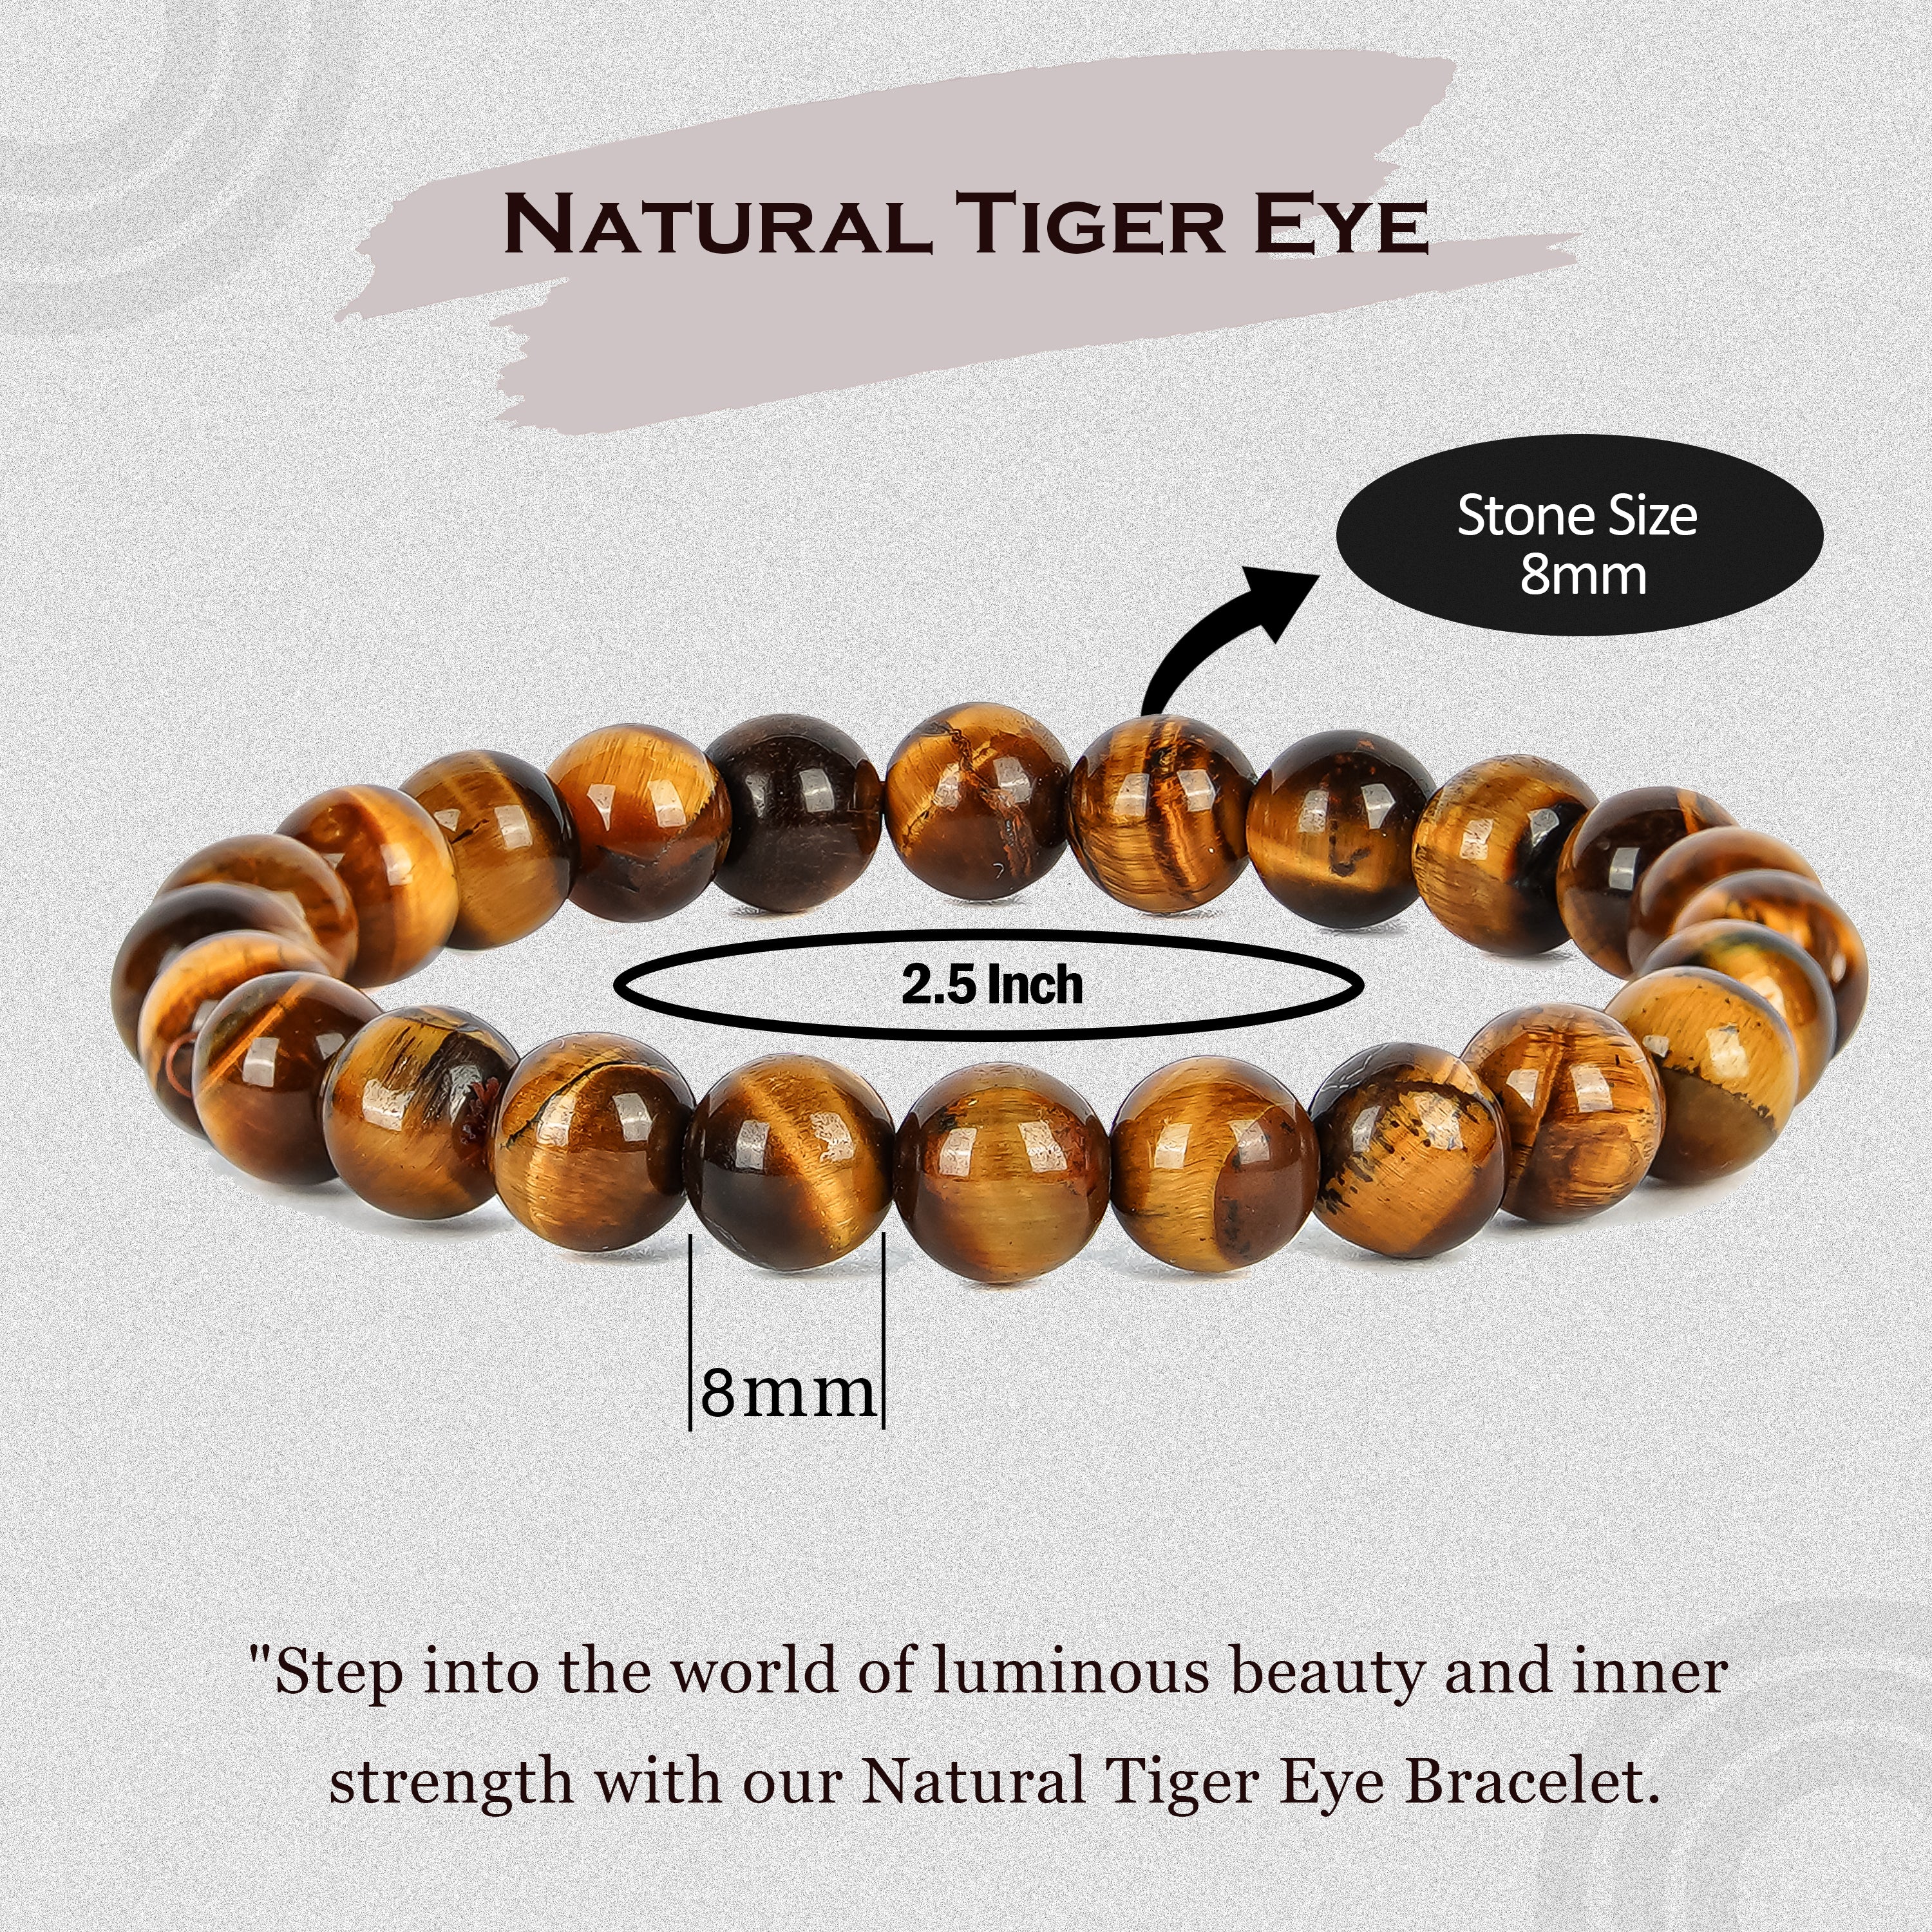 Tiger's Eye Stone/Beads Benefits and Jewelry - Inox Jewelry India